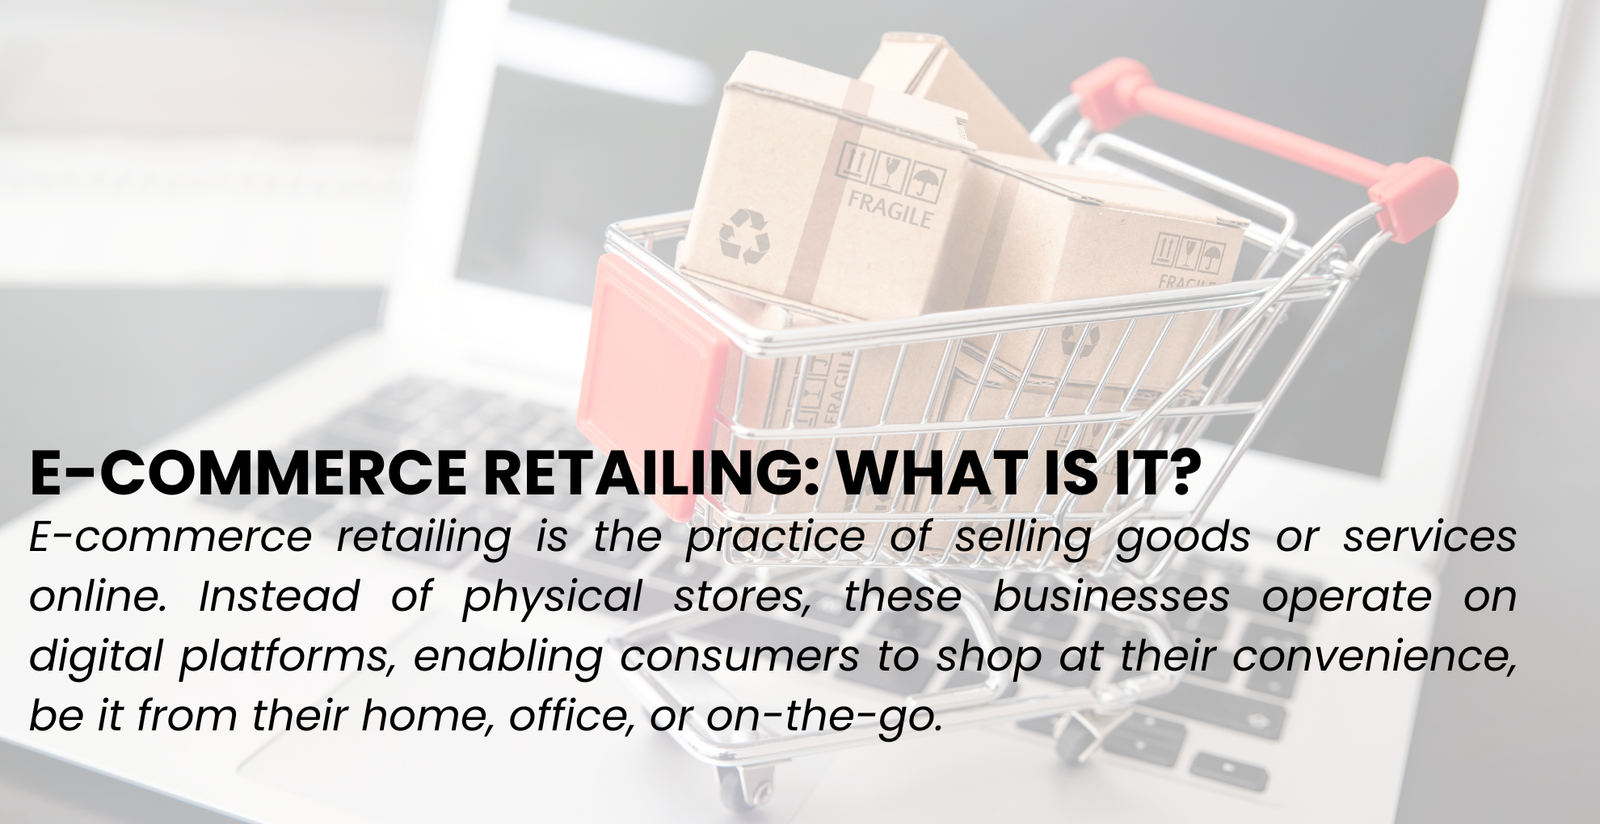 Retailing in E-commerce